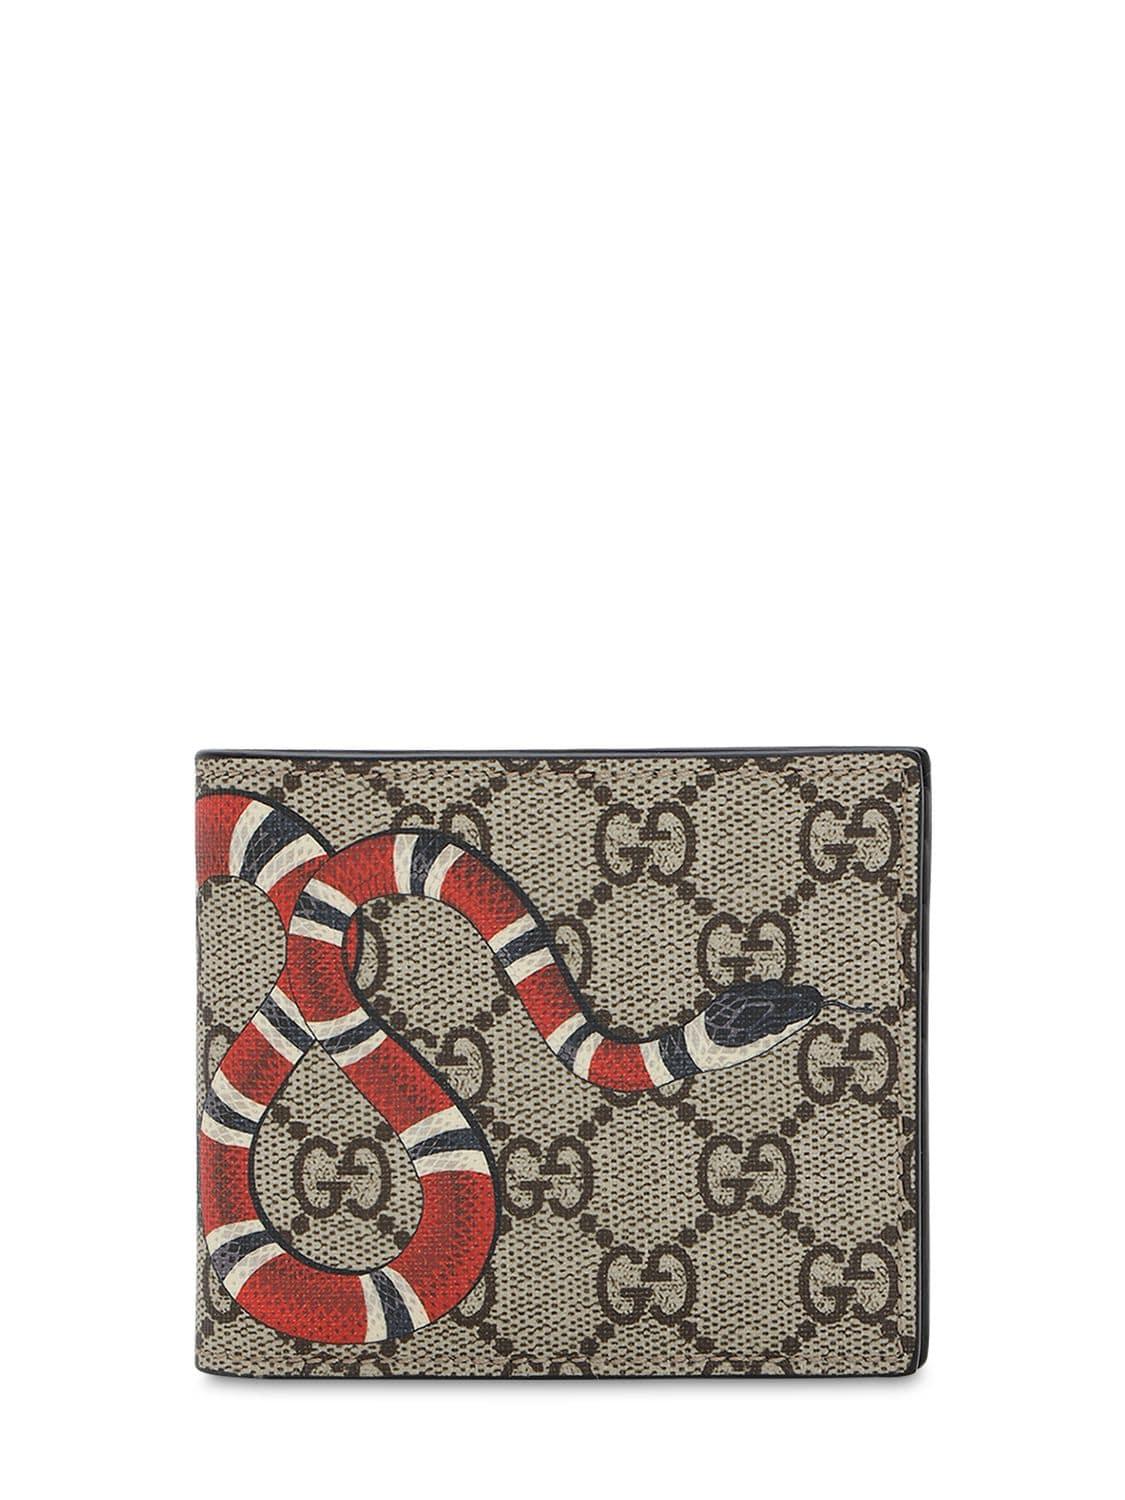 Gucci Snake Print Wallet Top Sellers, 55% OFF | www.ingeniovirtual.com